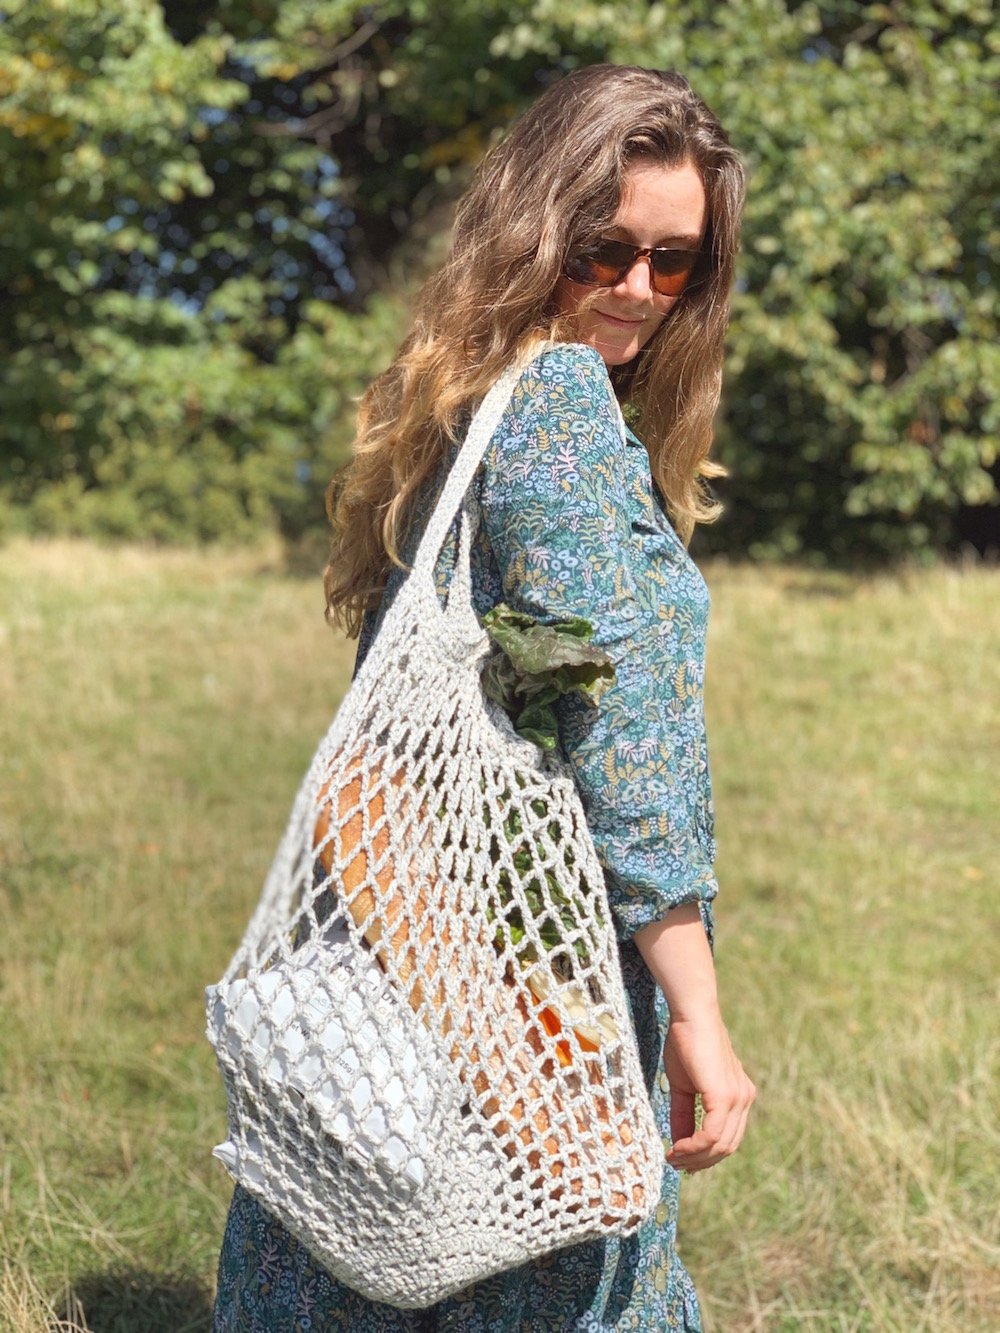 Crochet farmer's market bag